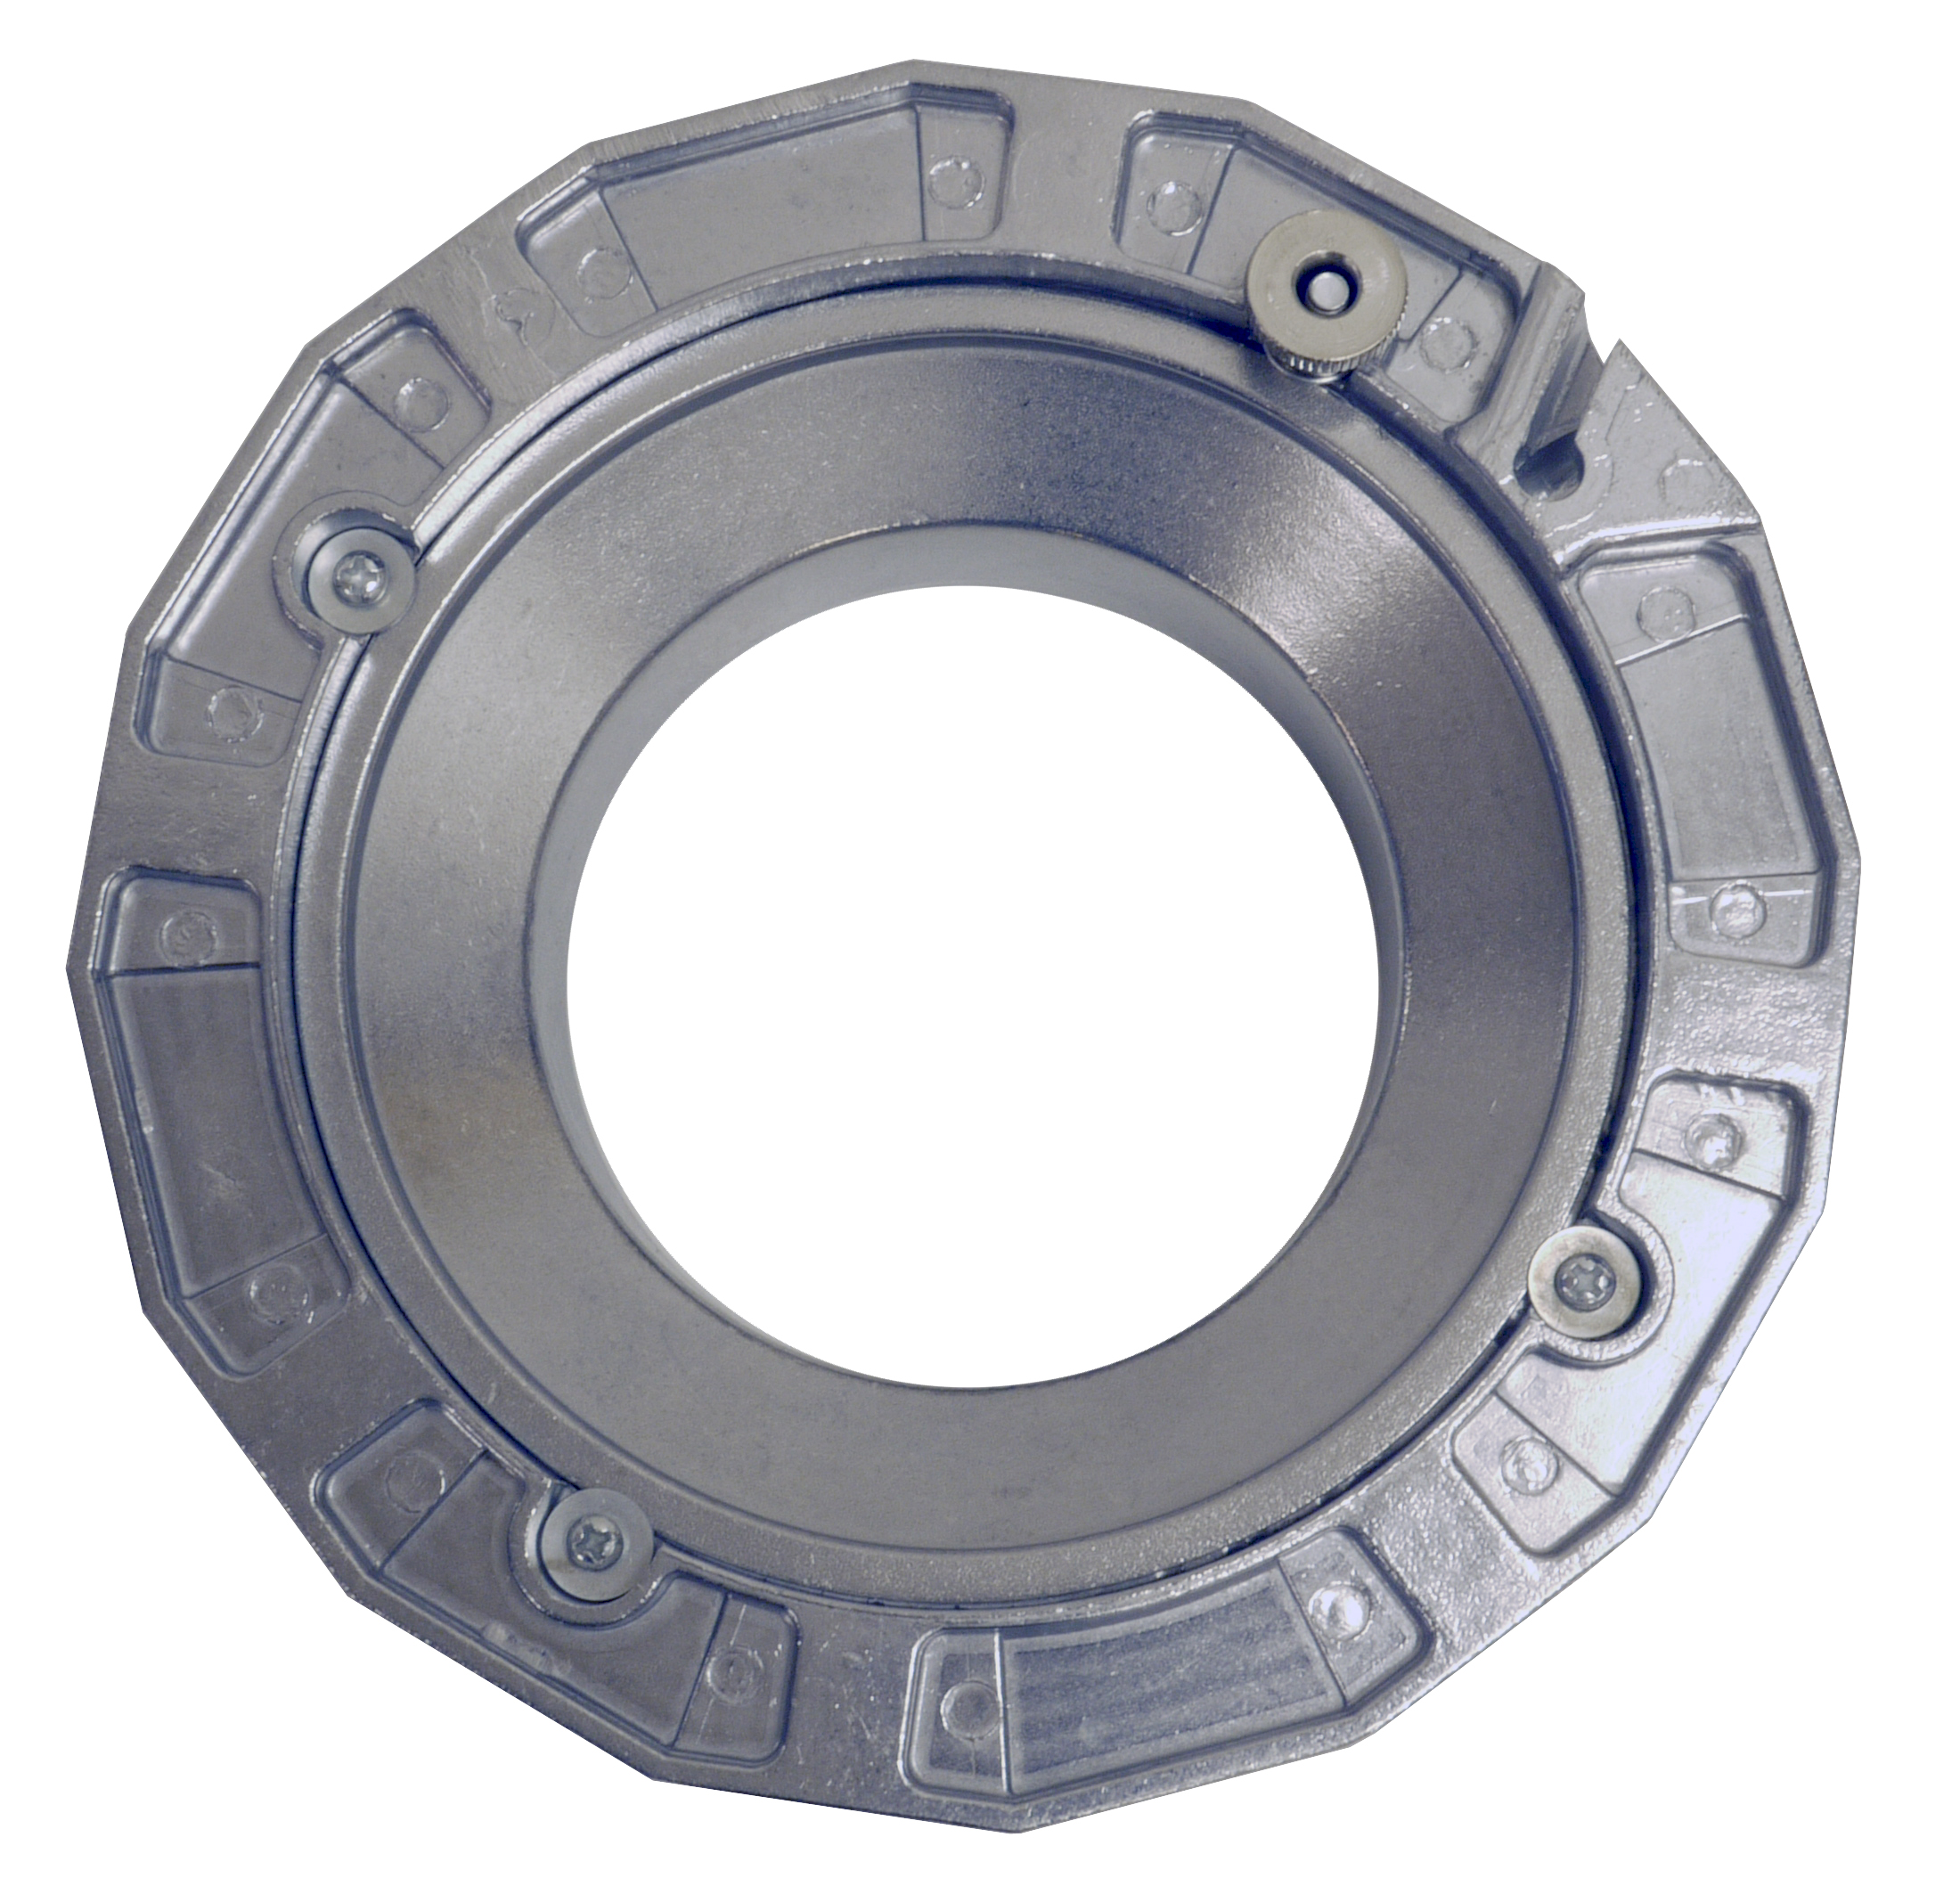 Promaster 4194 Speed Ring (Novatron2)